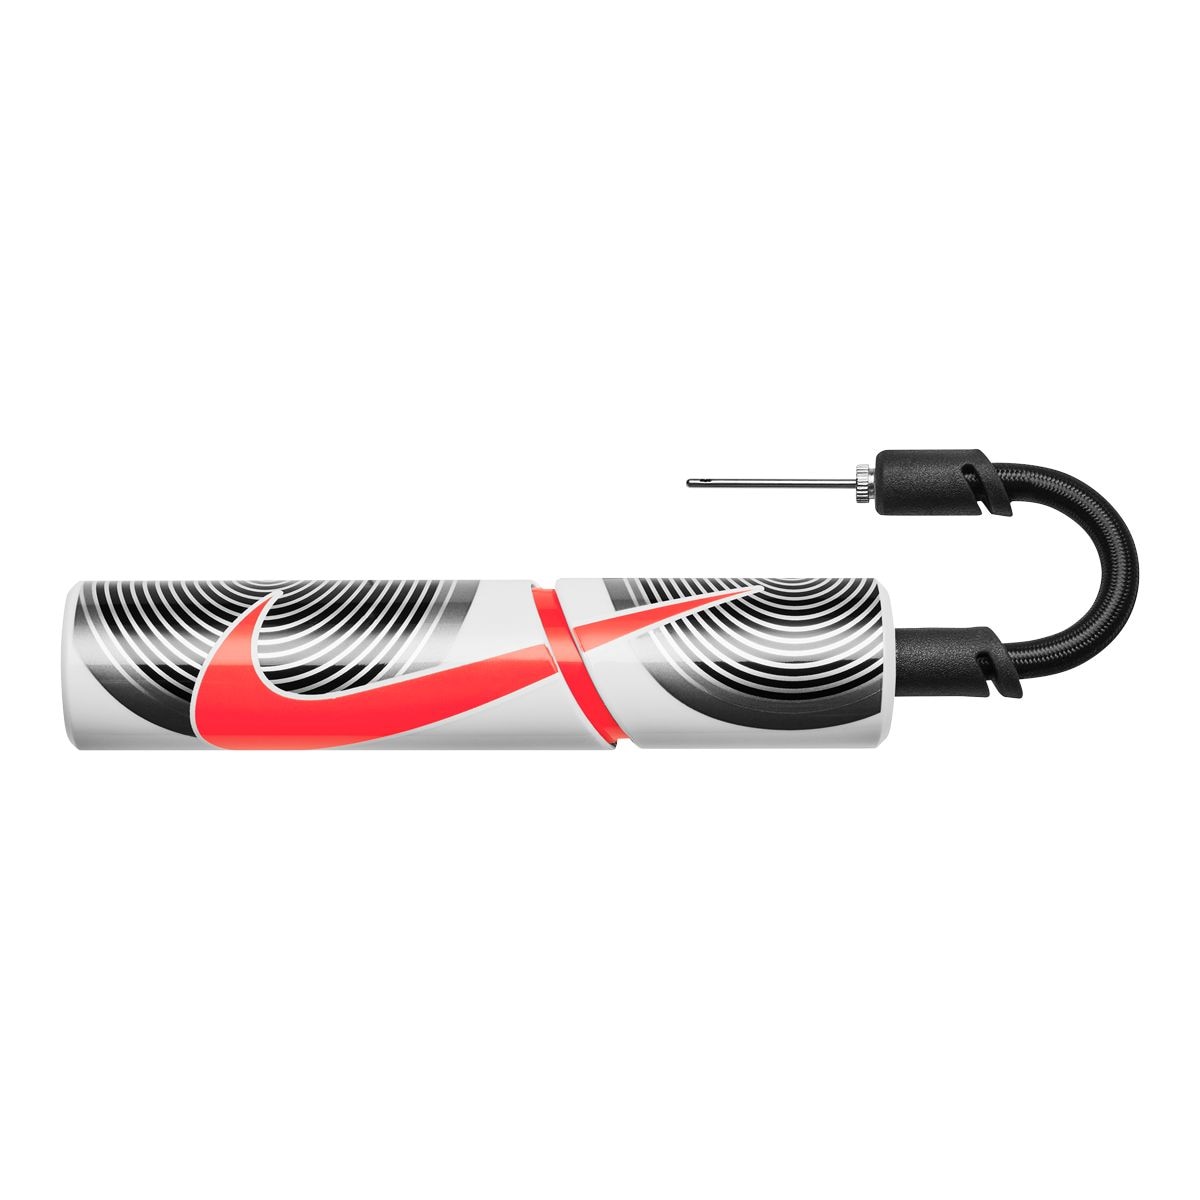 Nike Essential Ball Pump